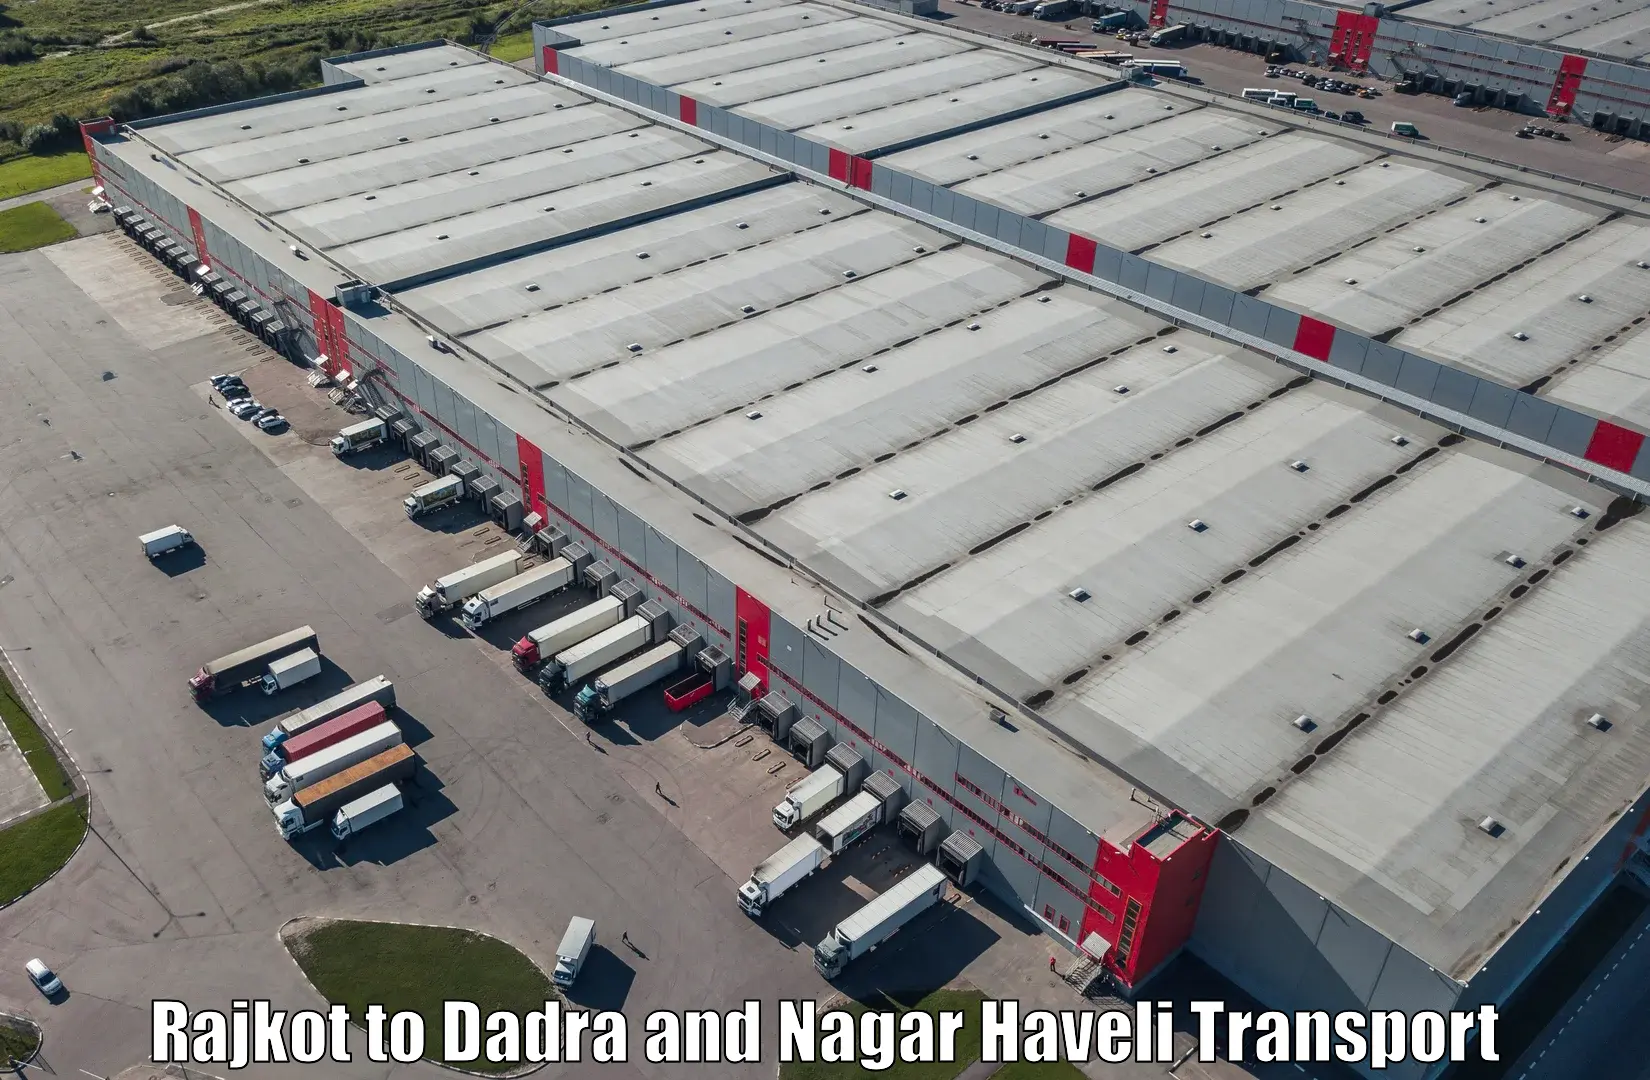 Truck transport companies in India Rajkot to Dadra and Nagar Haveli